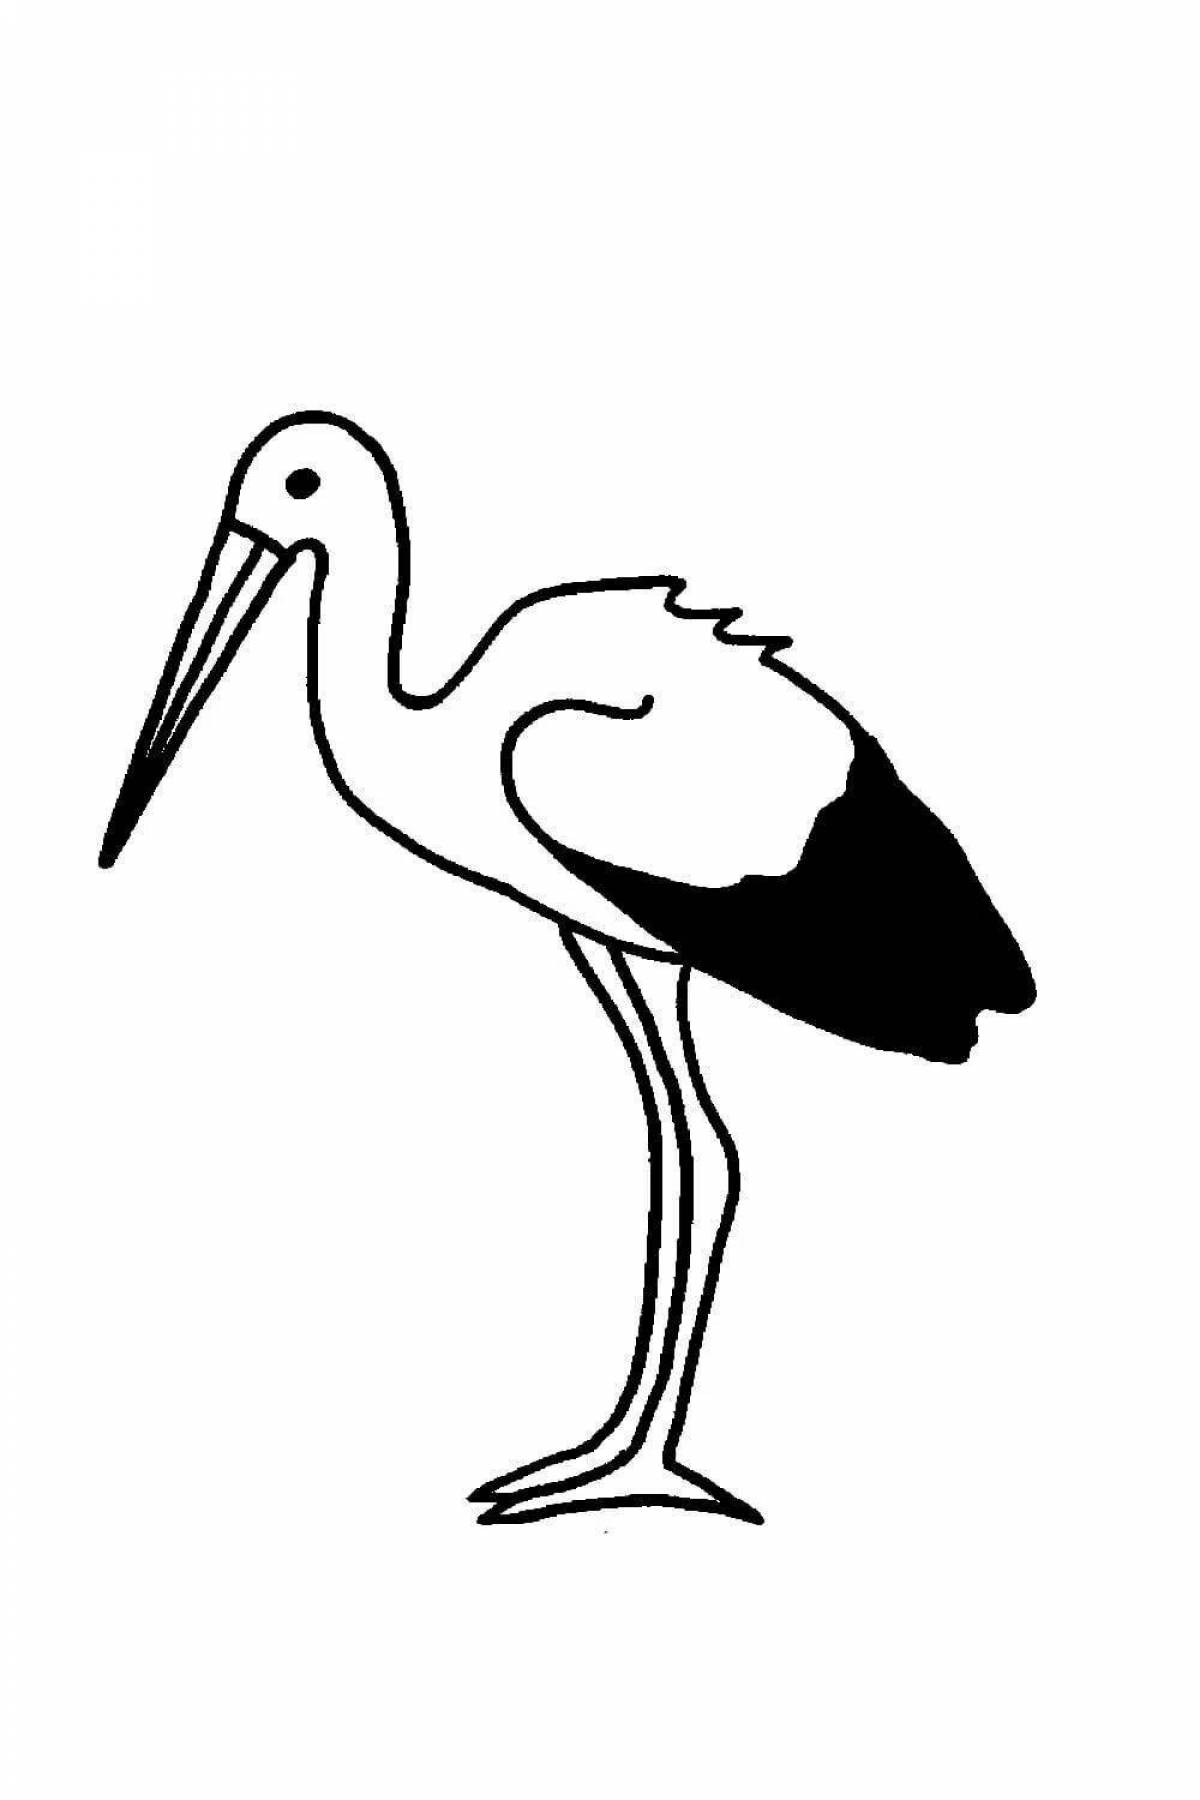 Coloring book nice black stork